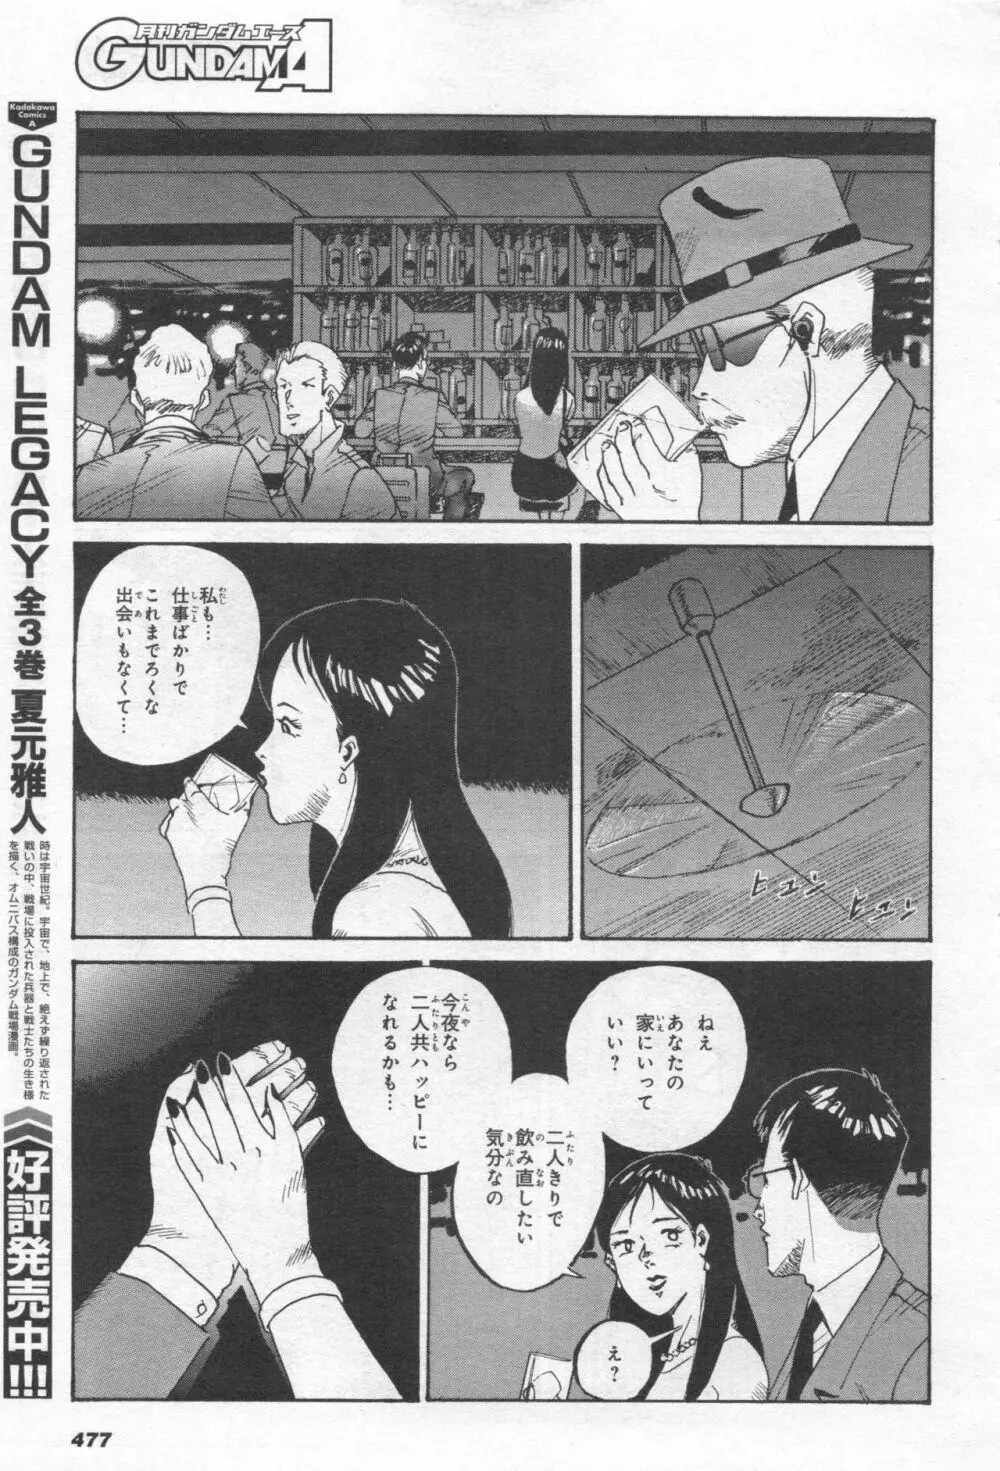 Gundam Ace – October 2019 480ページ